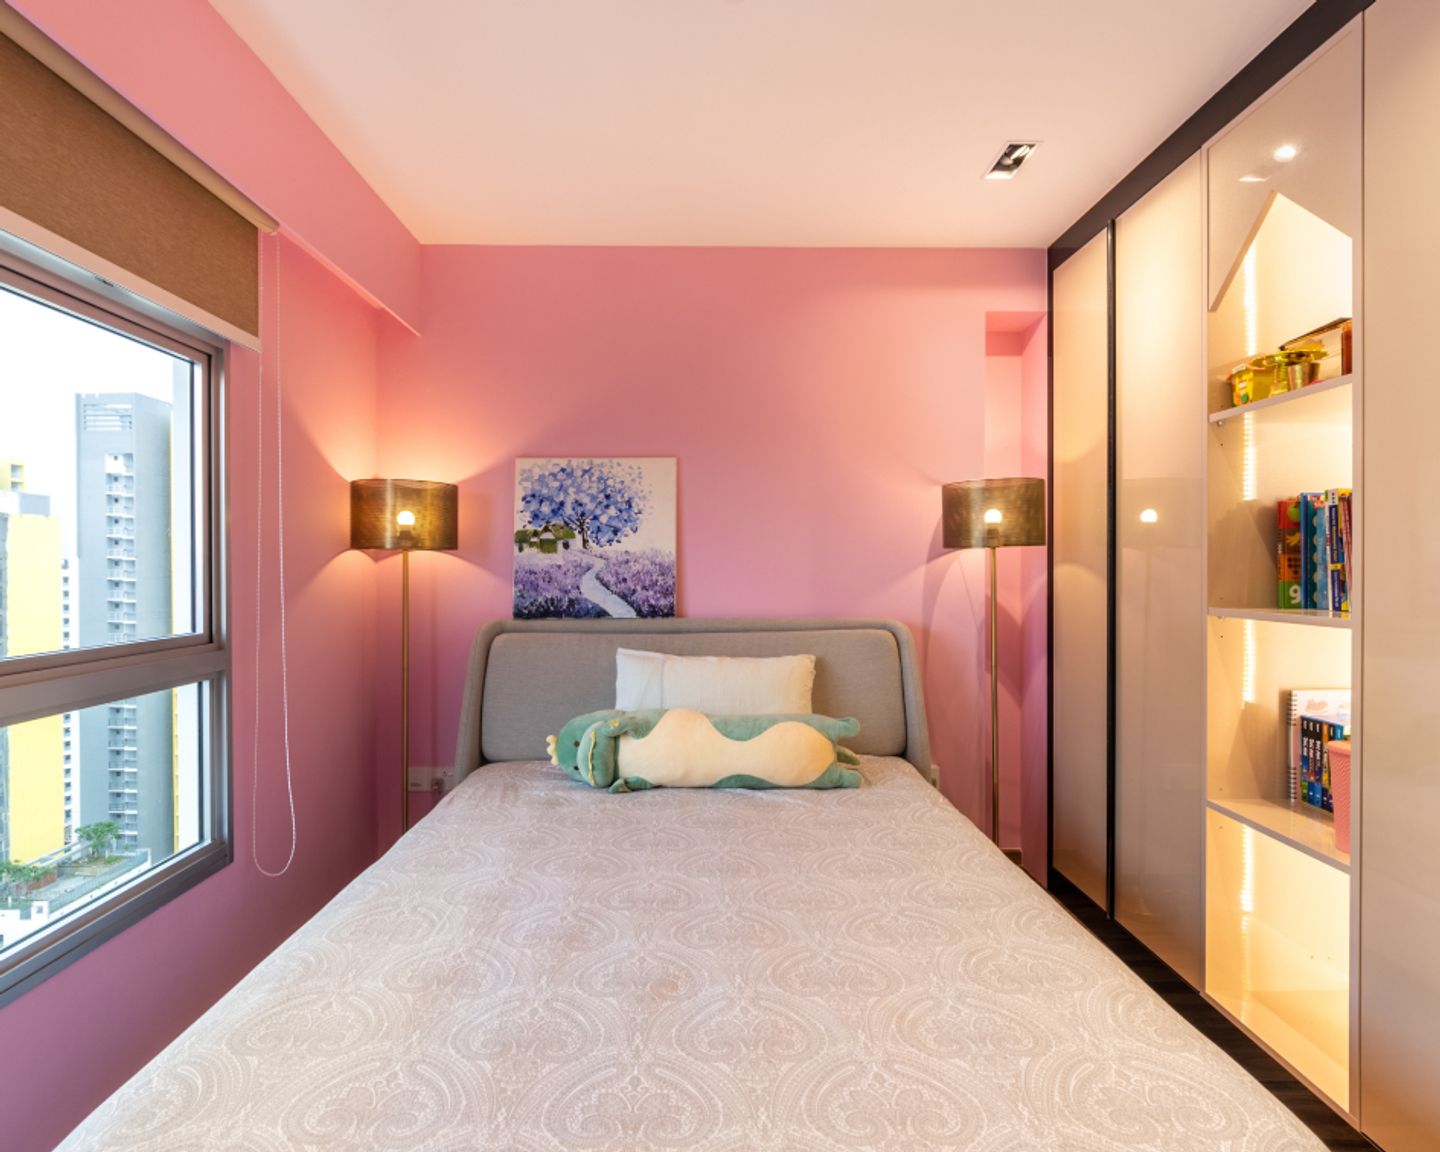 Modern Kid's Room Design In Pink